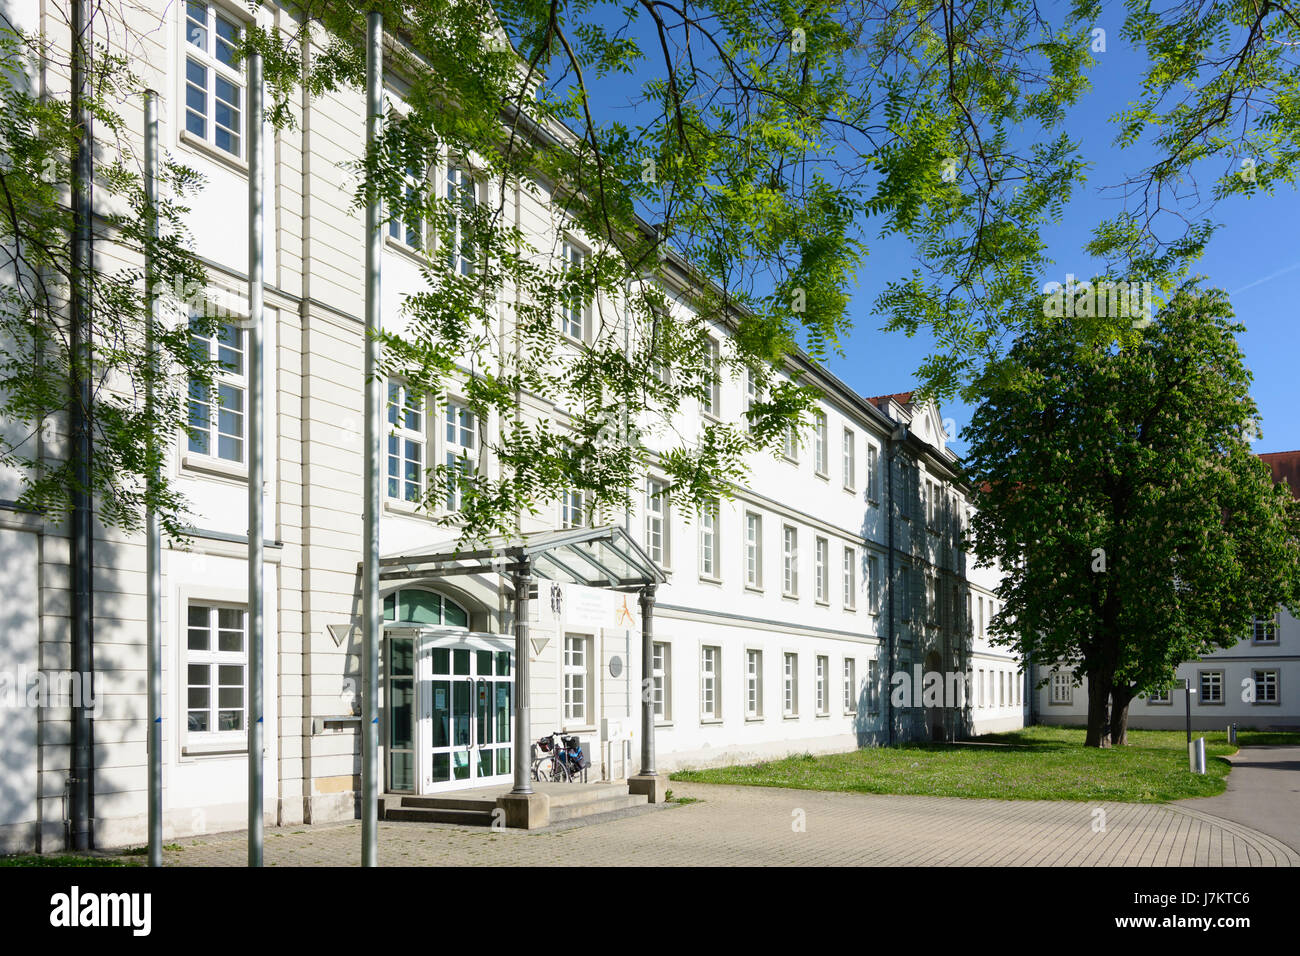 Landesarchiv (Provincial Archives) Baden-Württemberg, Ludwigsburg, Region Stuttgart, Baden-Württemberg, Germany Stock Photo